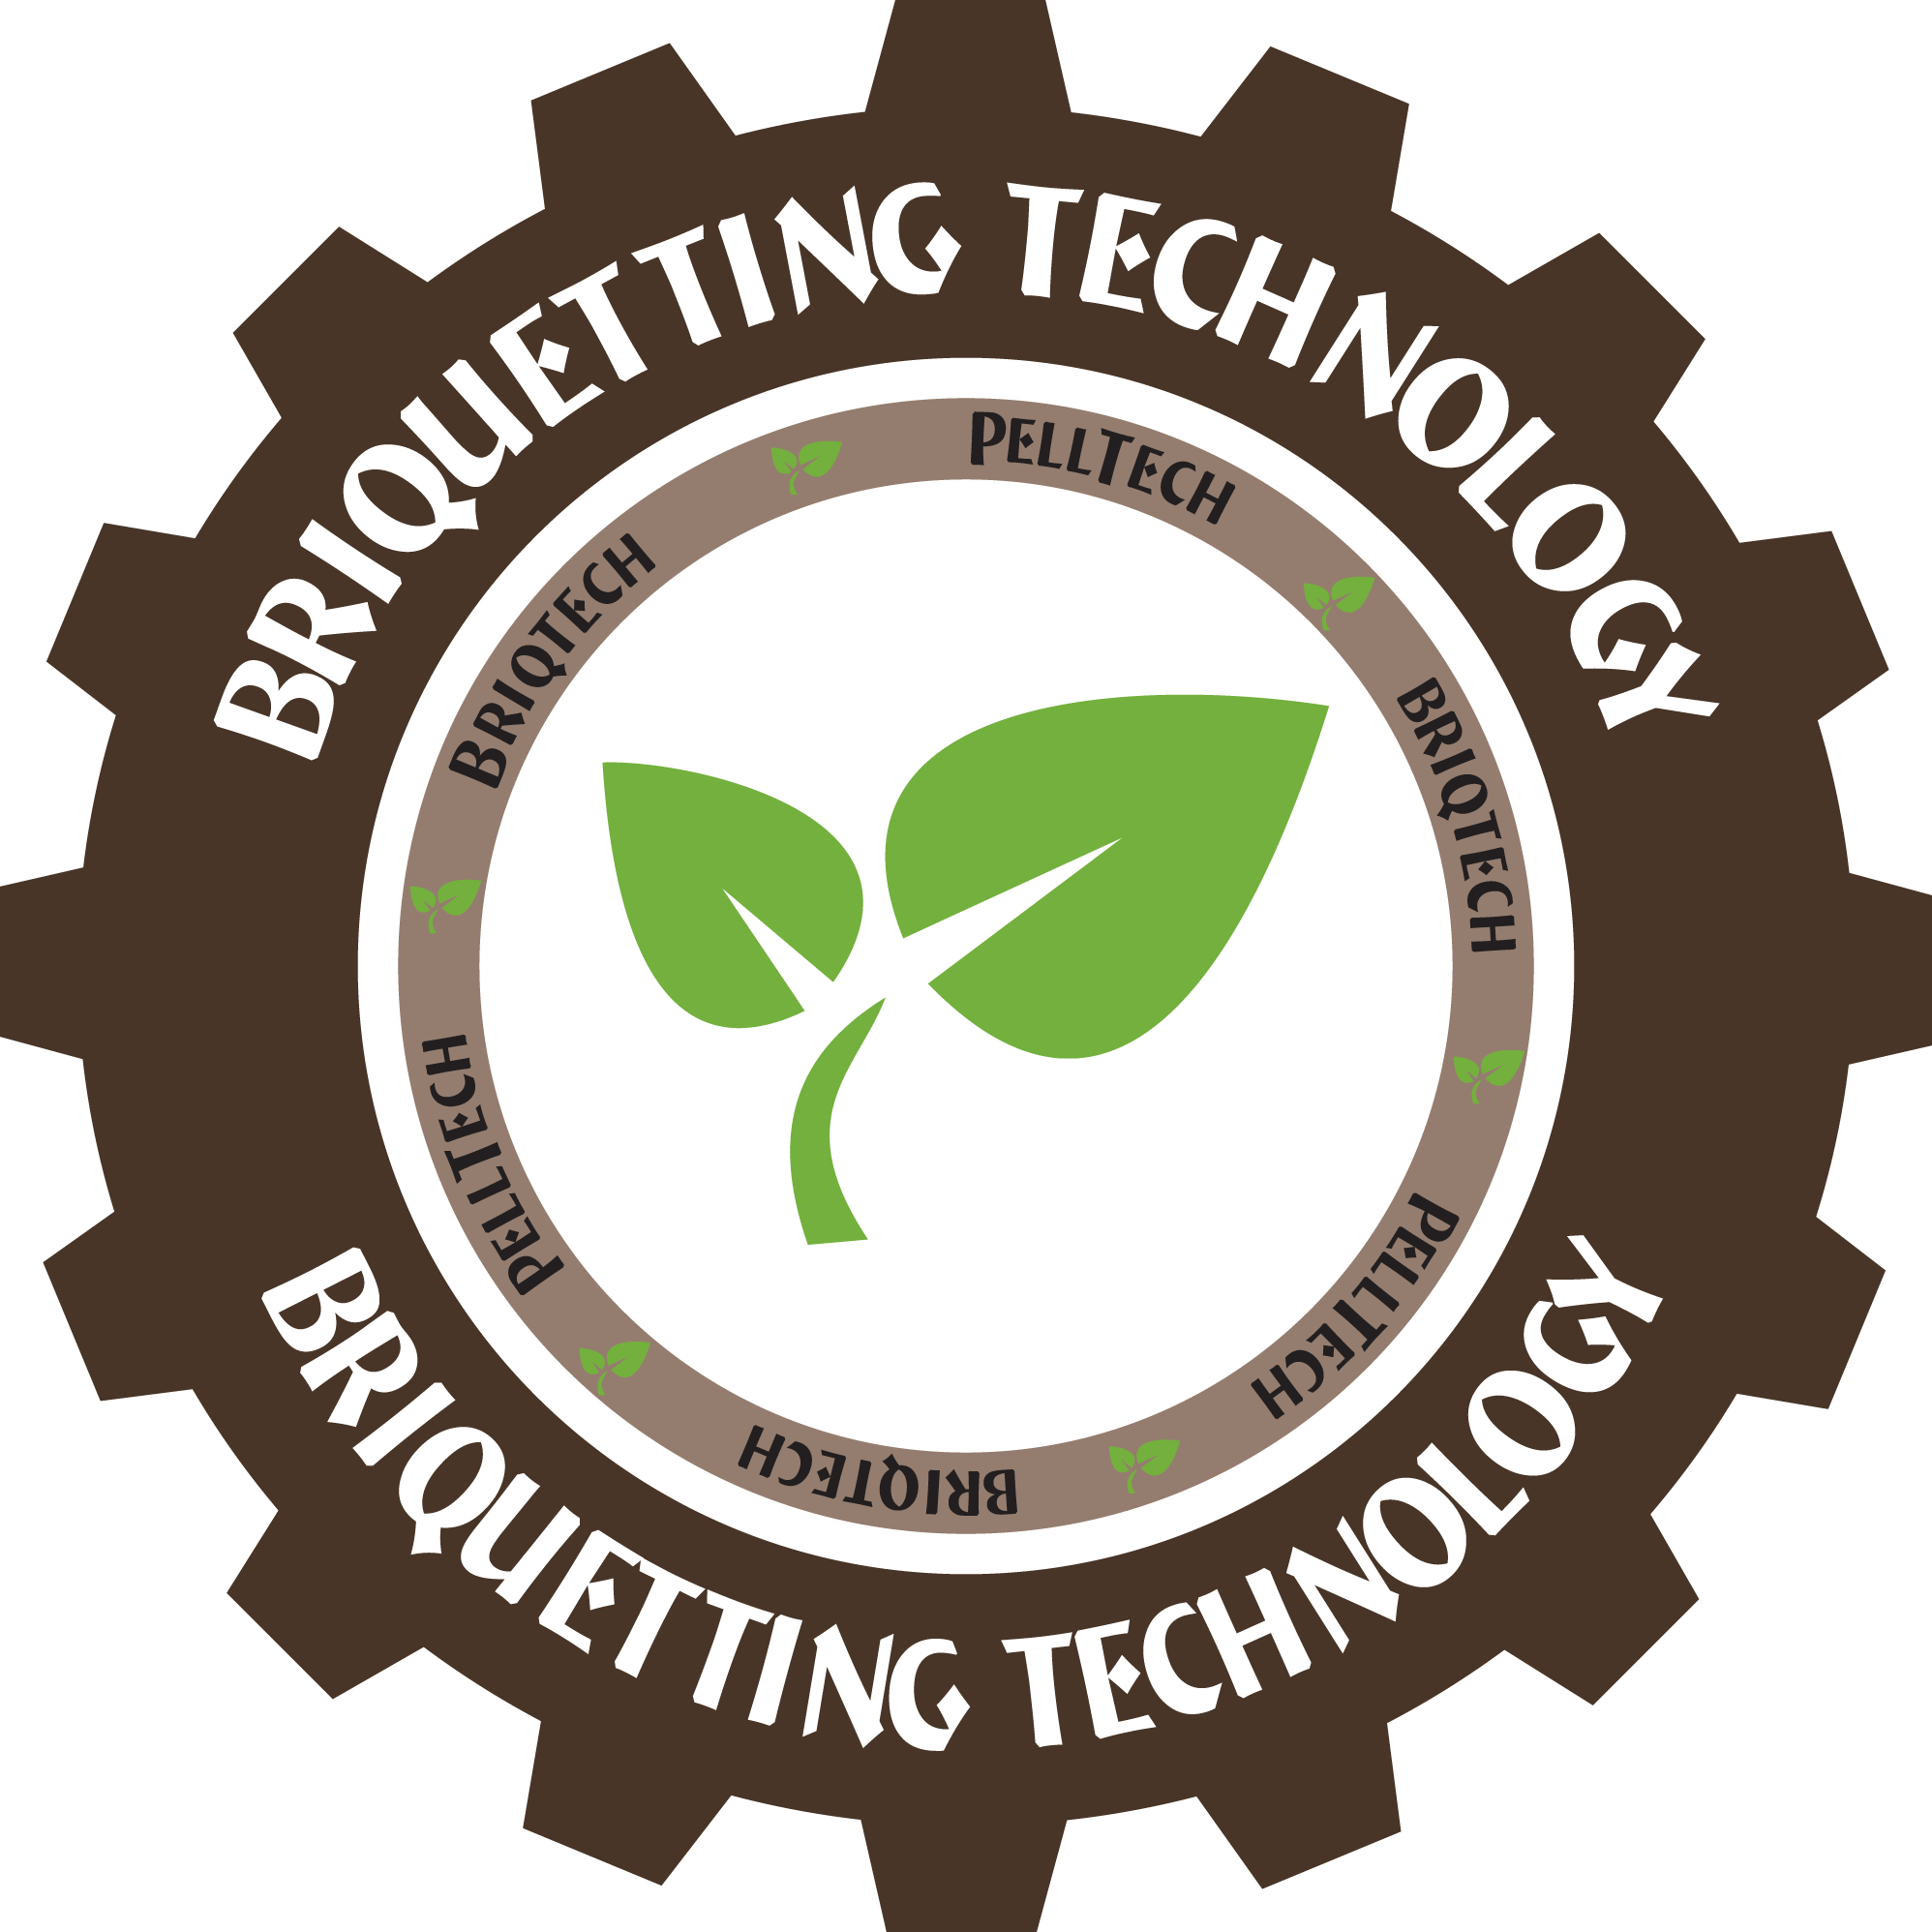 Briquetting Technology seria BriqTech & PellTech